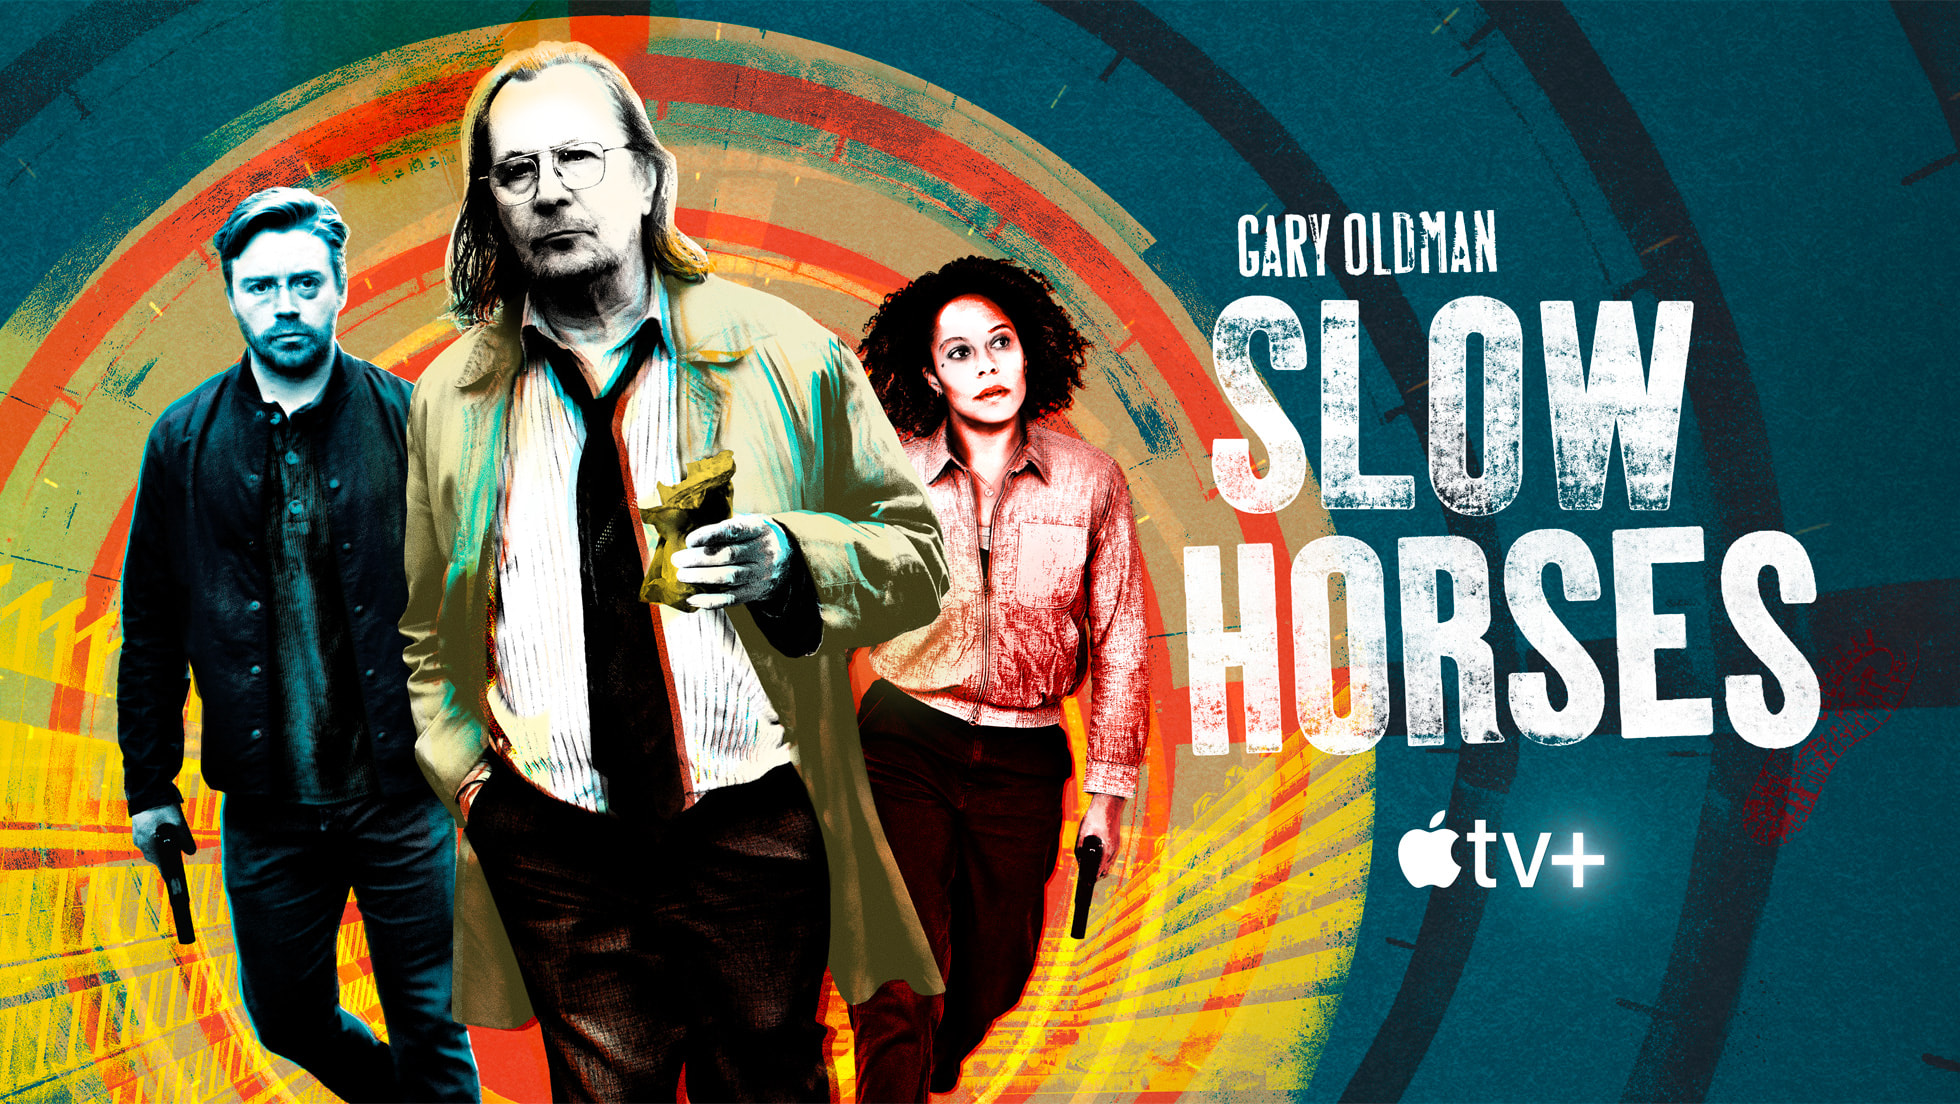 Apple TV+ announces fifth season for “Slow Horses” starring Academy Award winner Gary Oldman